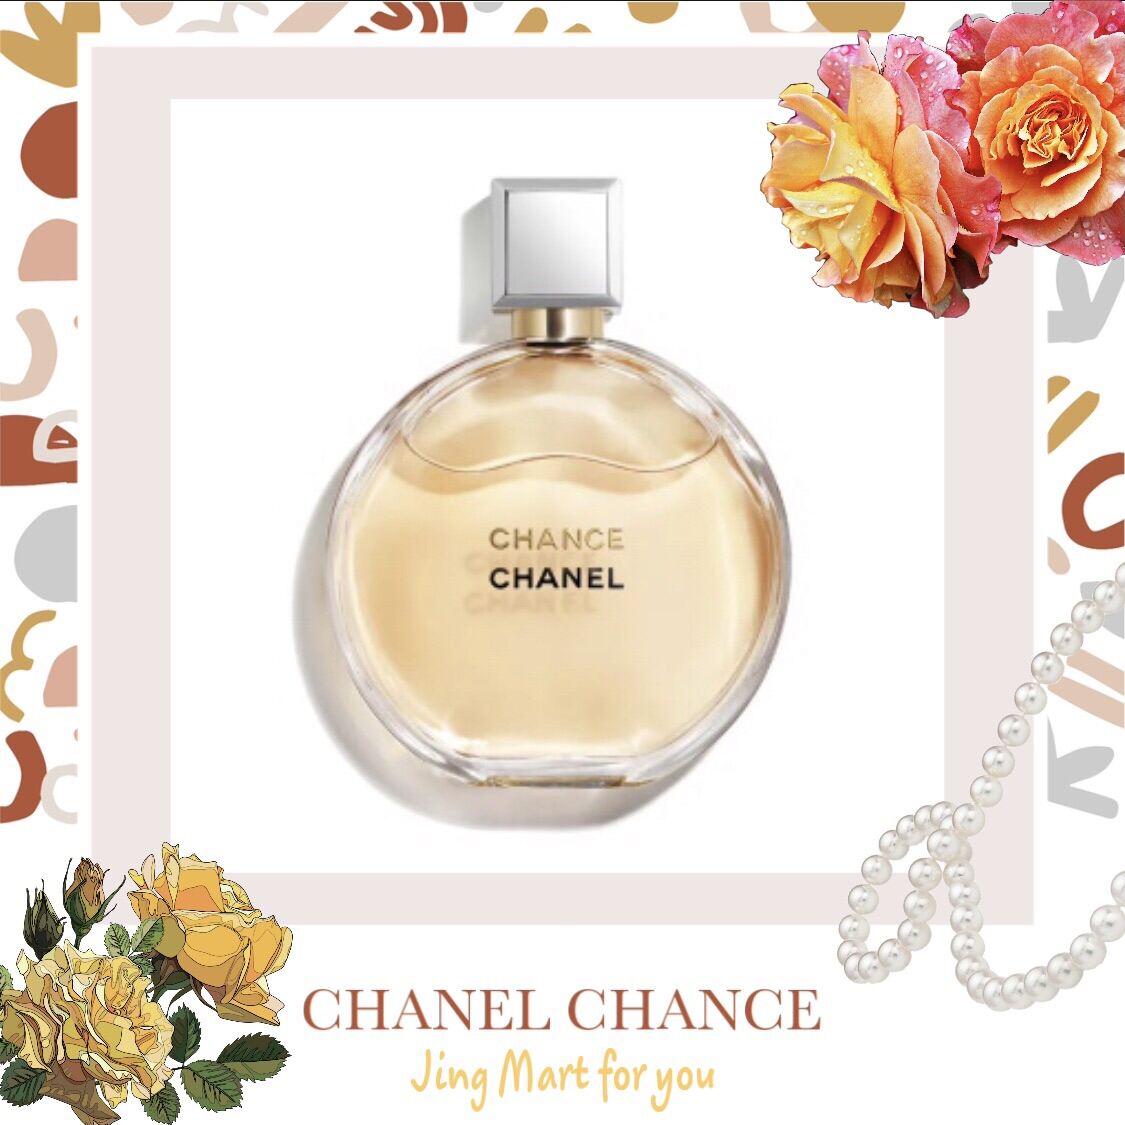 CHANEL CHANCE Eau de Parfum Nước hoa Chanel Pháp 100ml